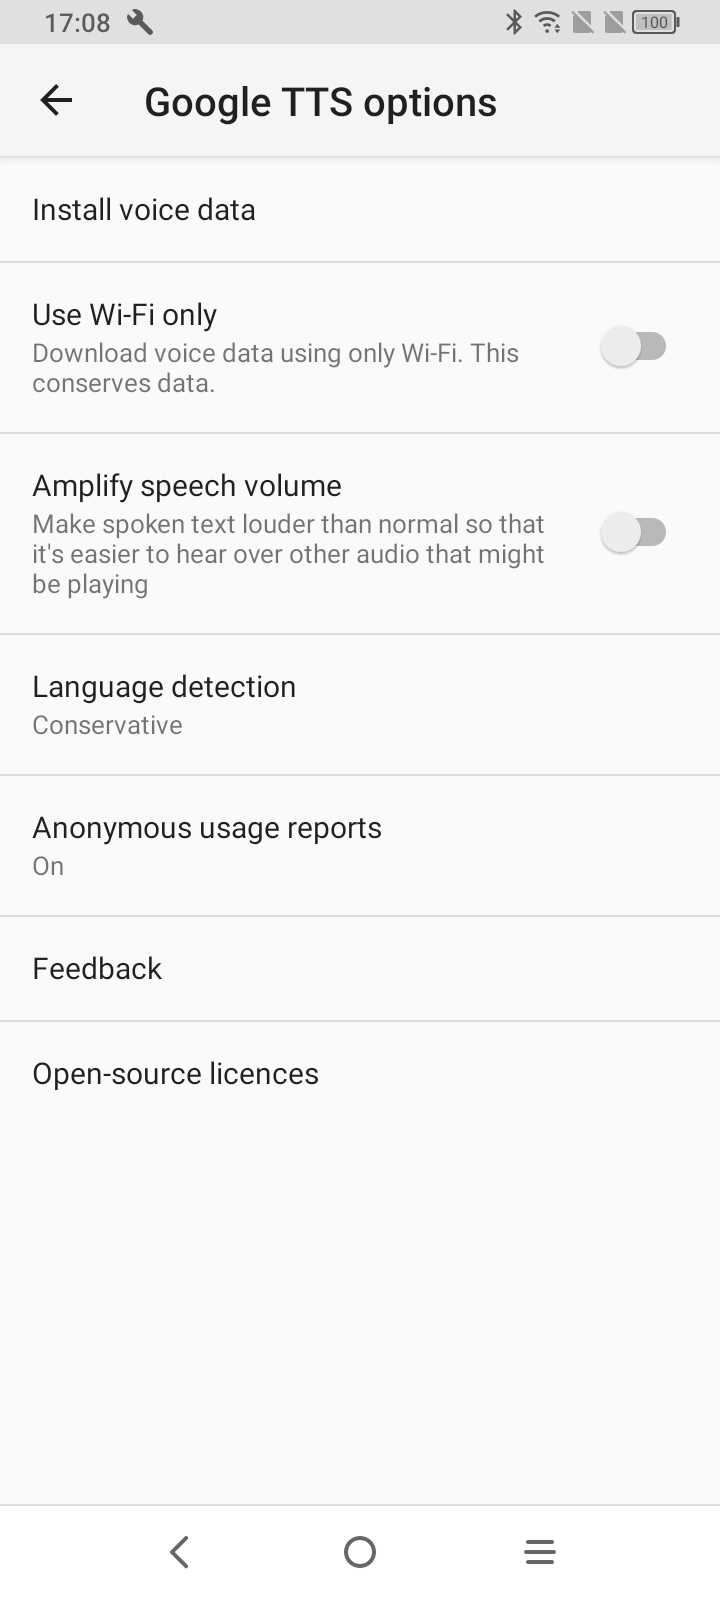 Install voice data